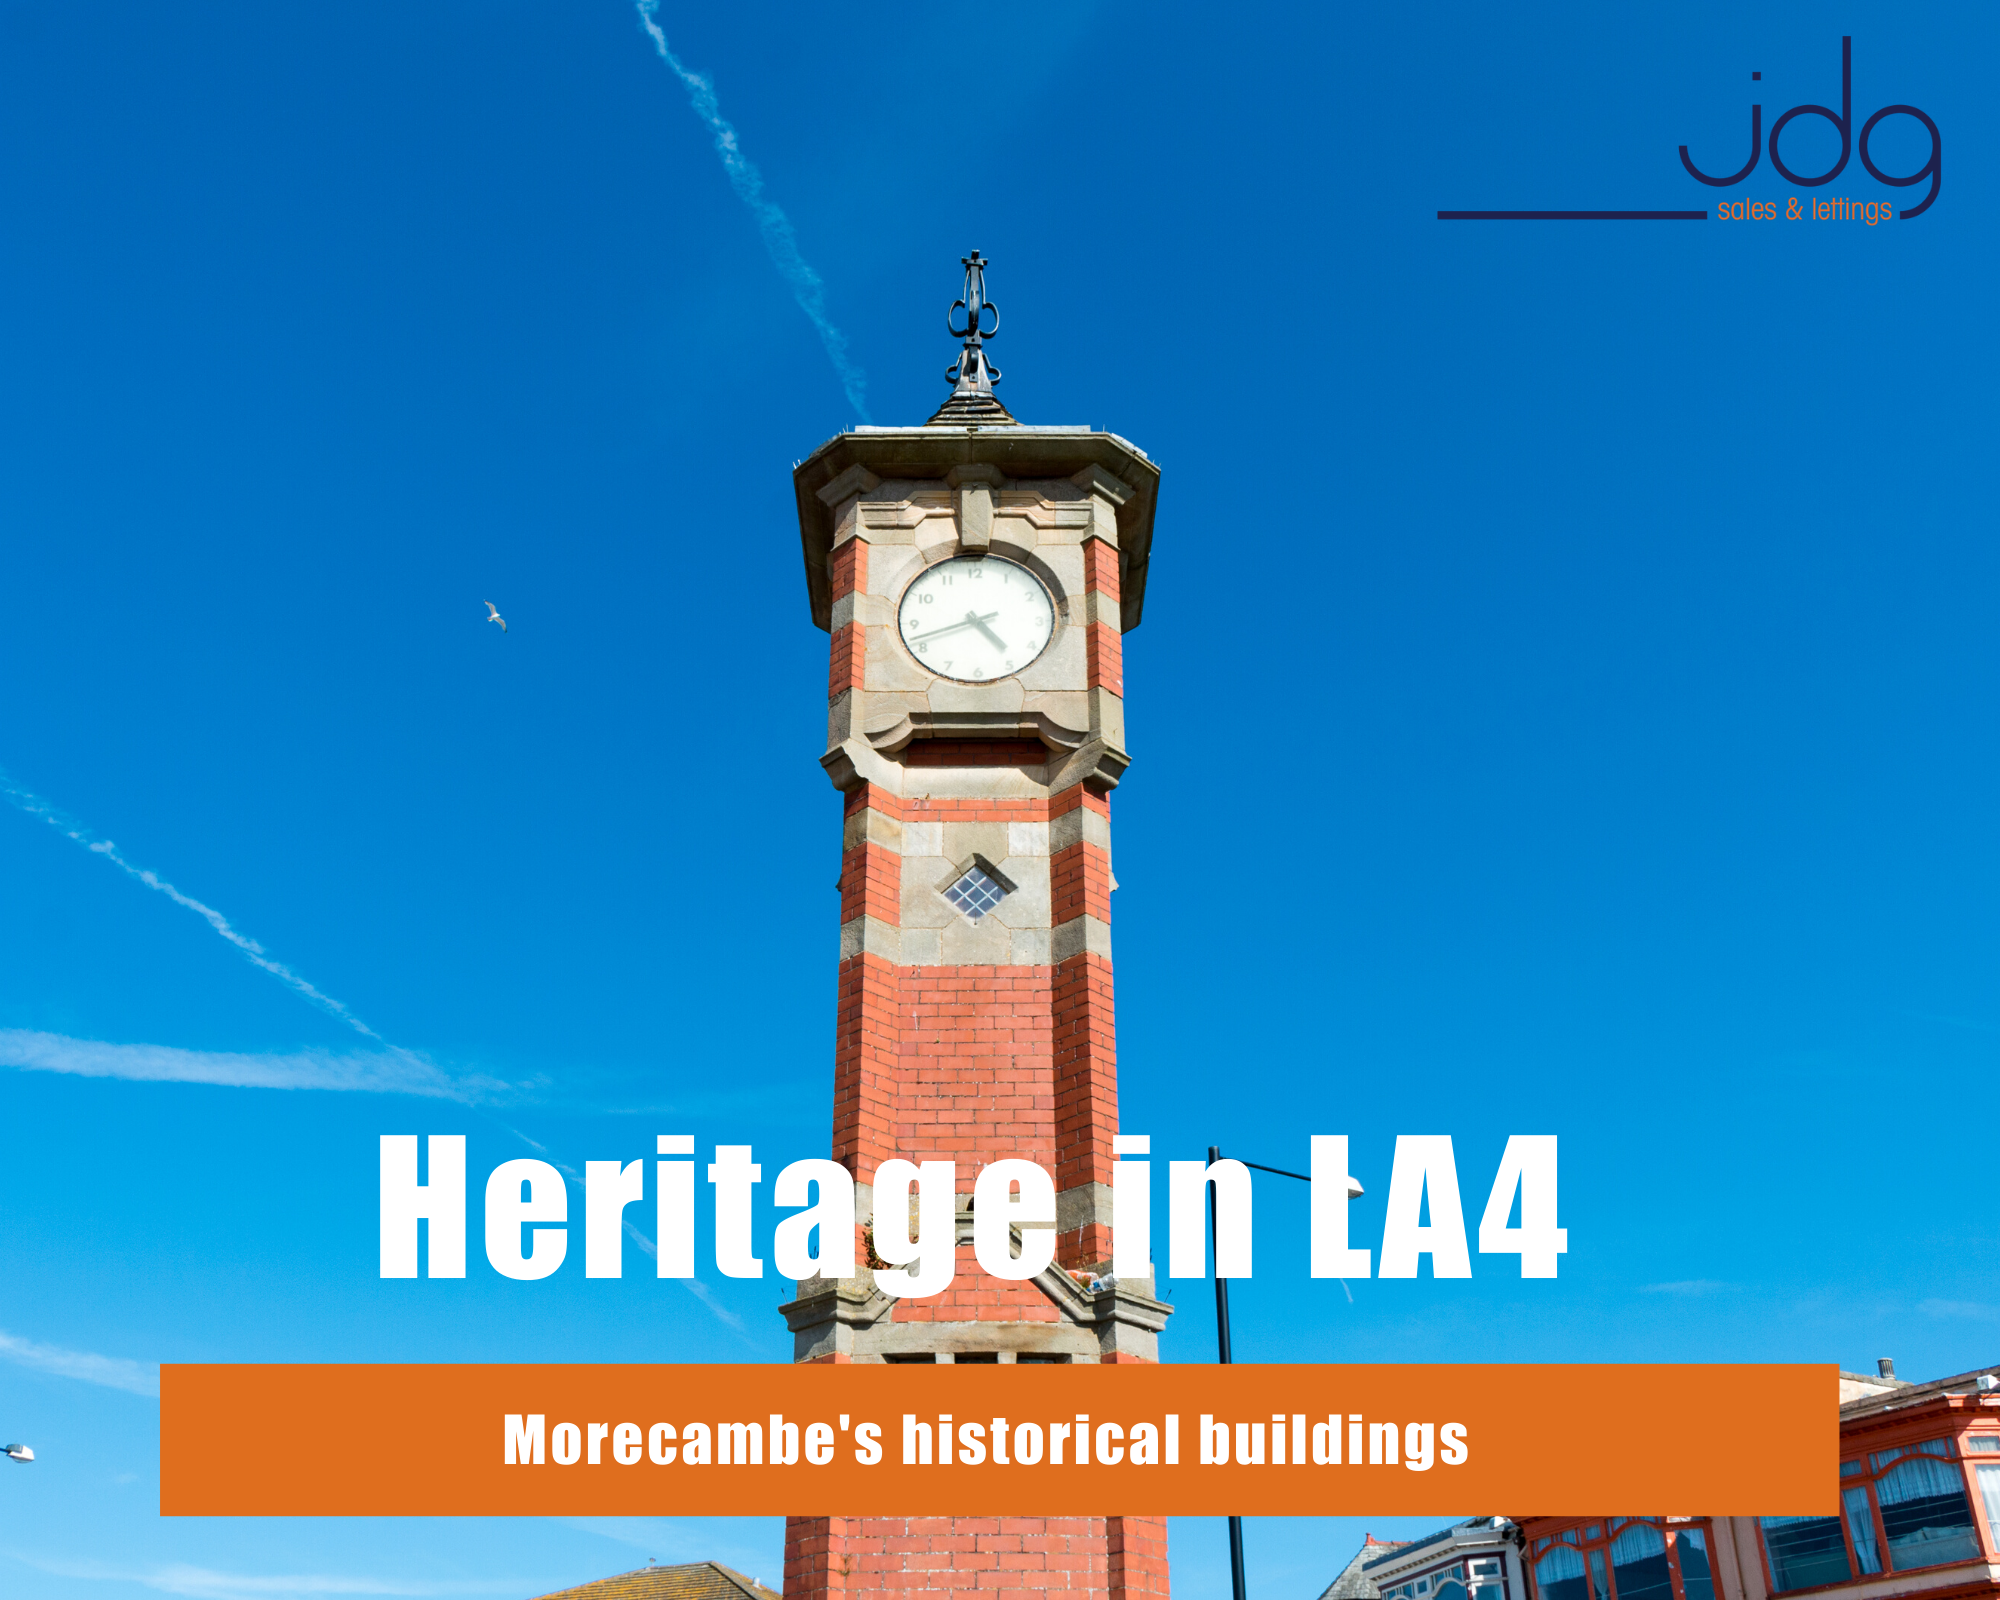 Morecambe's historic buildings - a focus on LA4